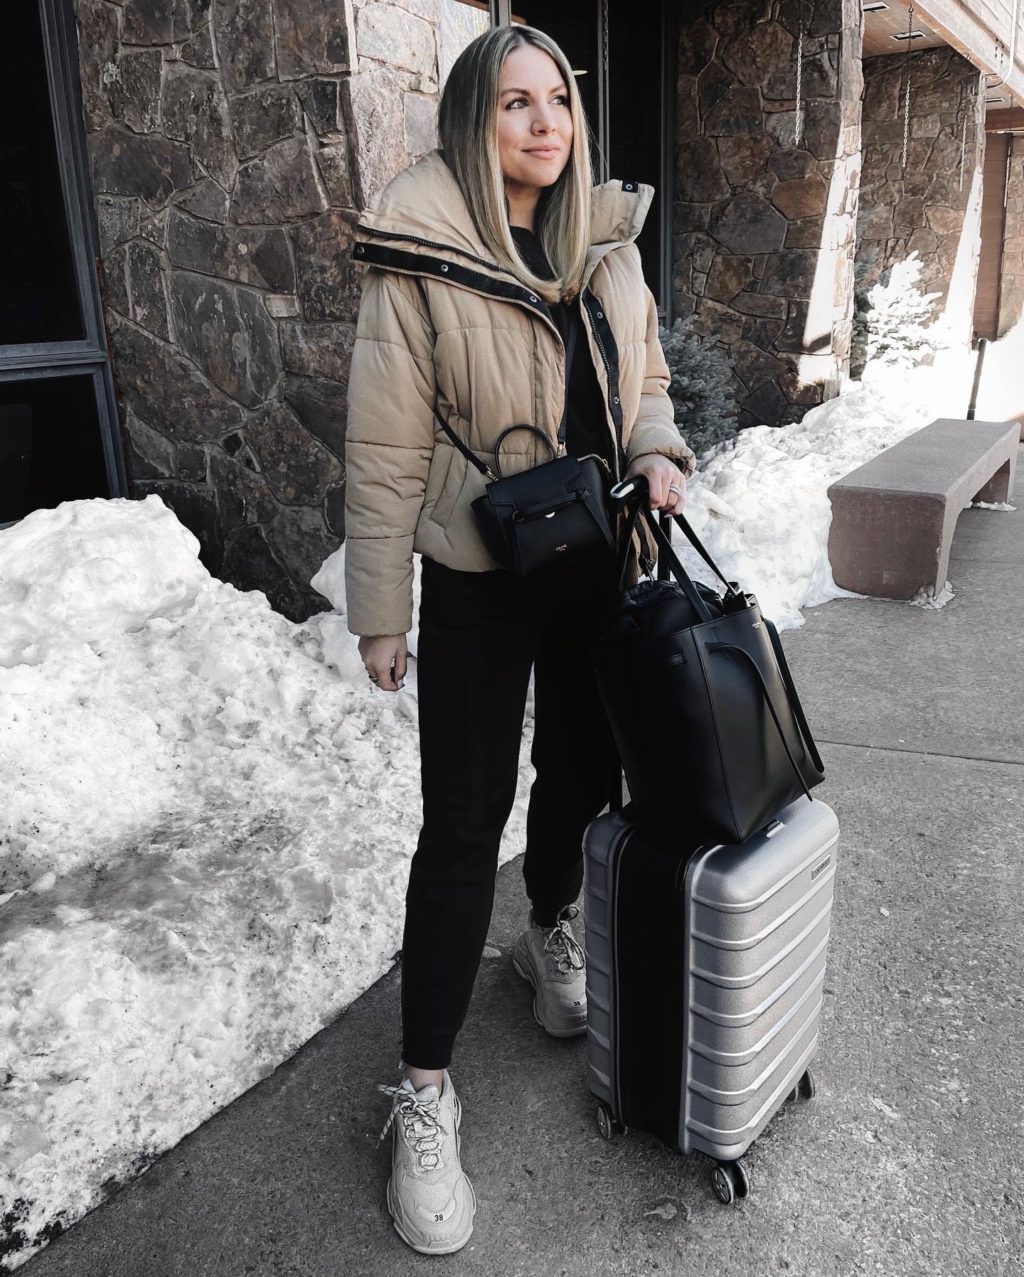 aspen ski trip packing 